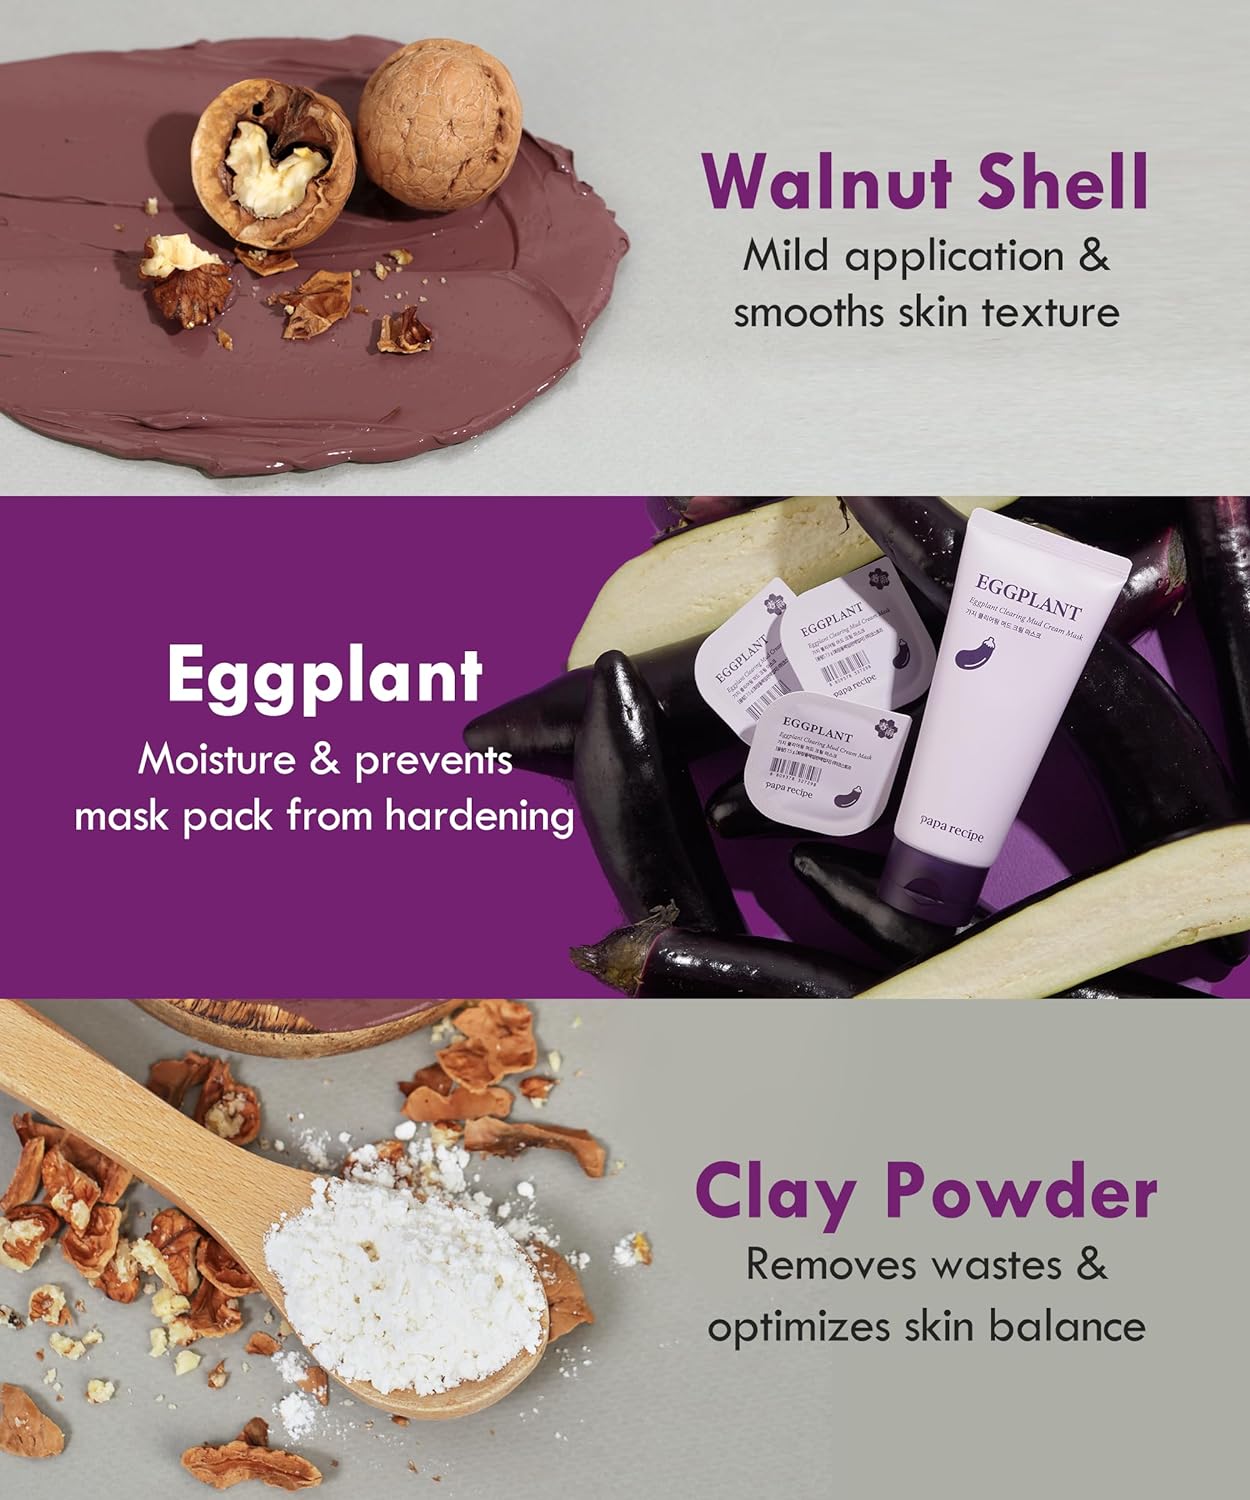 Papa Recipe Eggplant Clearing Mud Cream Mask 100ml - DODOSKIN